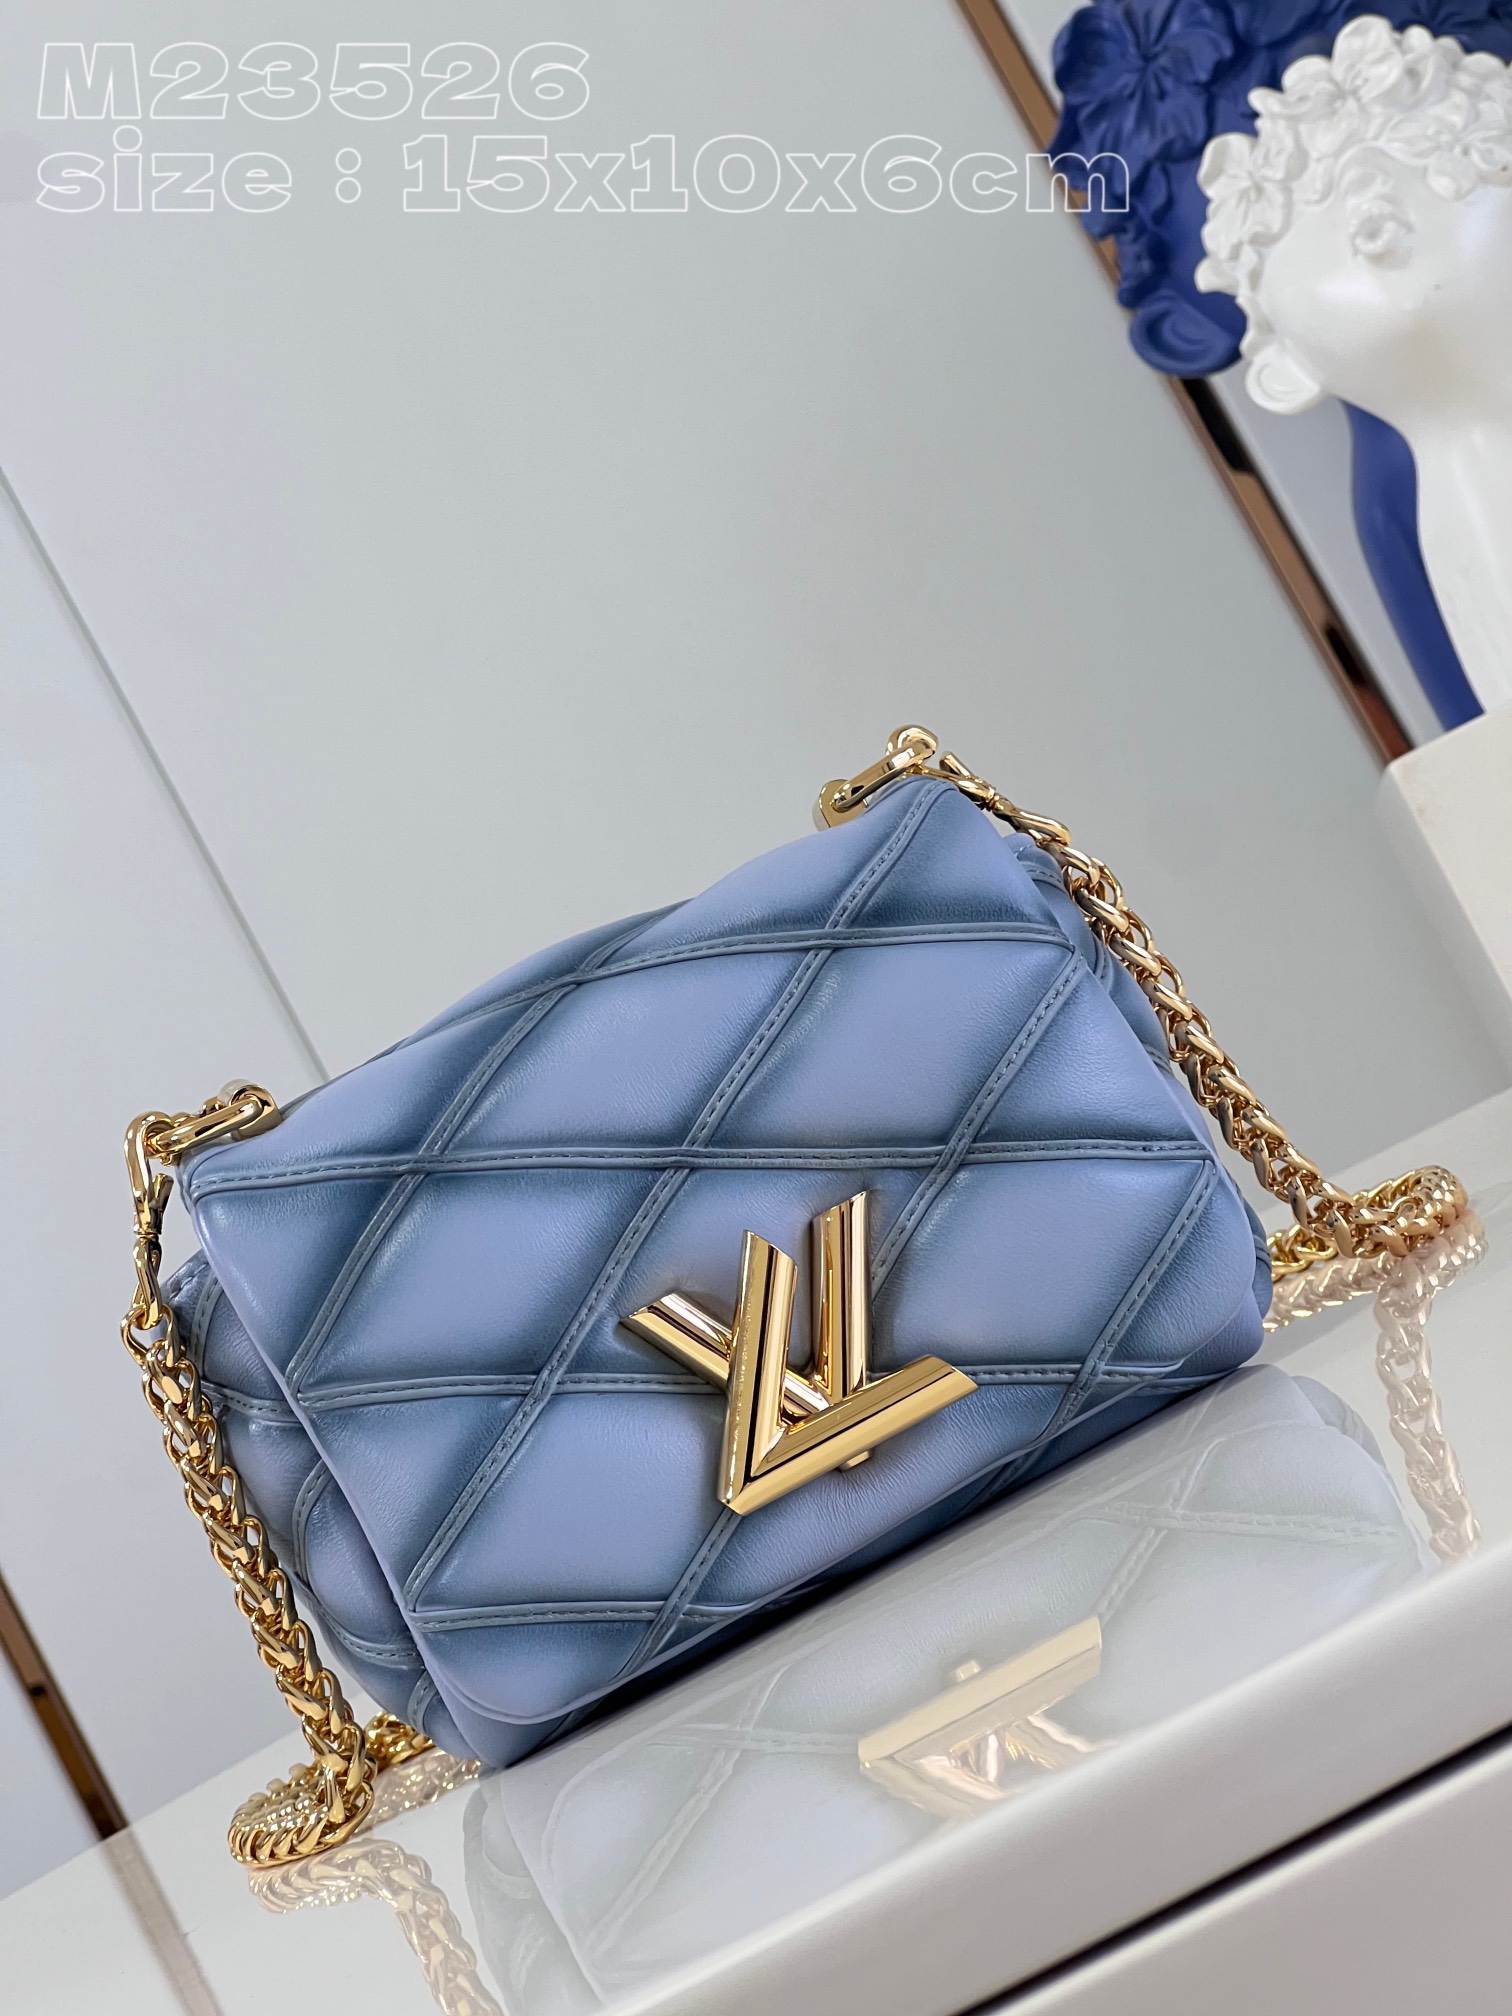 Louis Vuitton Sale
 Bags Handbags Designer 1:1 Replica
 Blue Cowhide Sheepskin LV Twist M23526